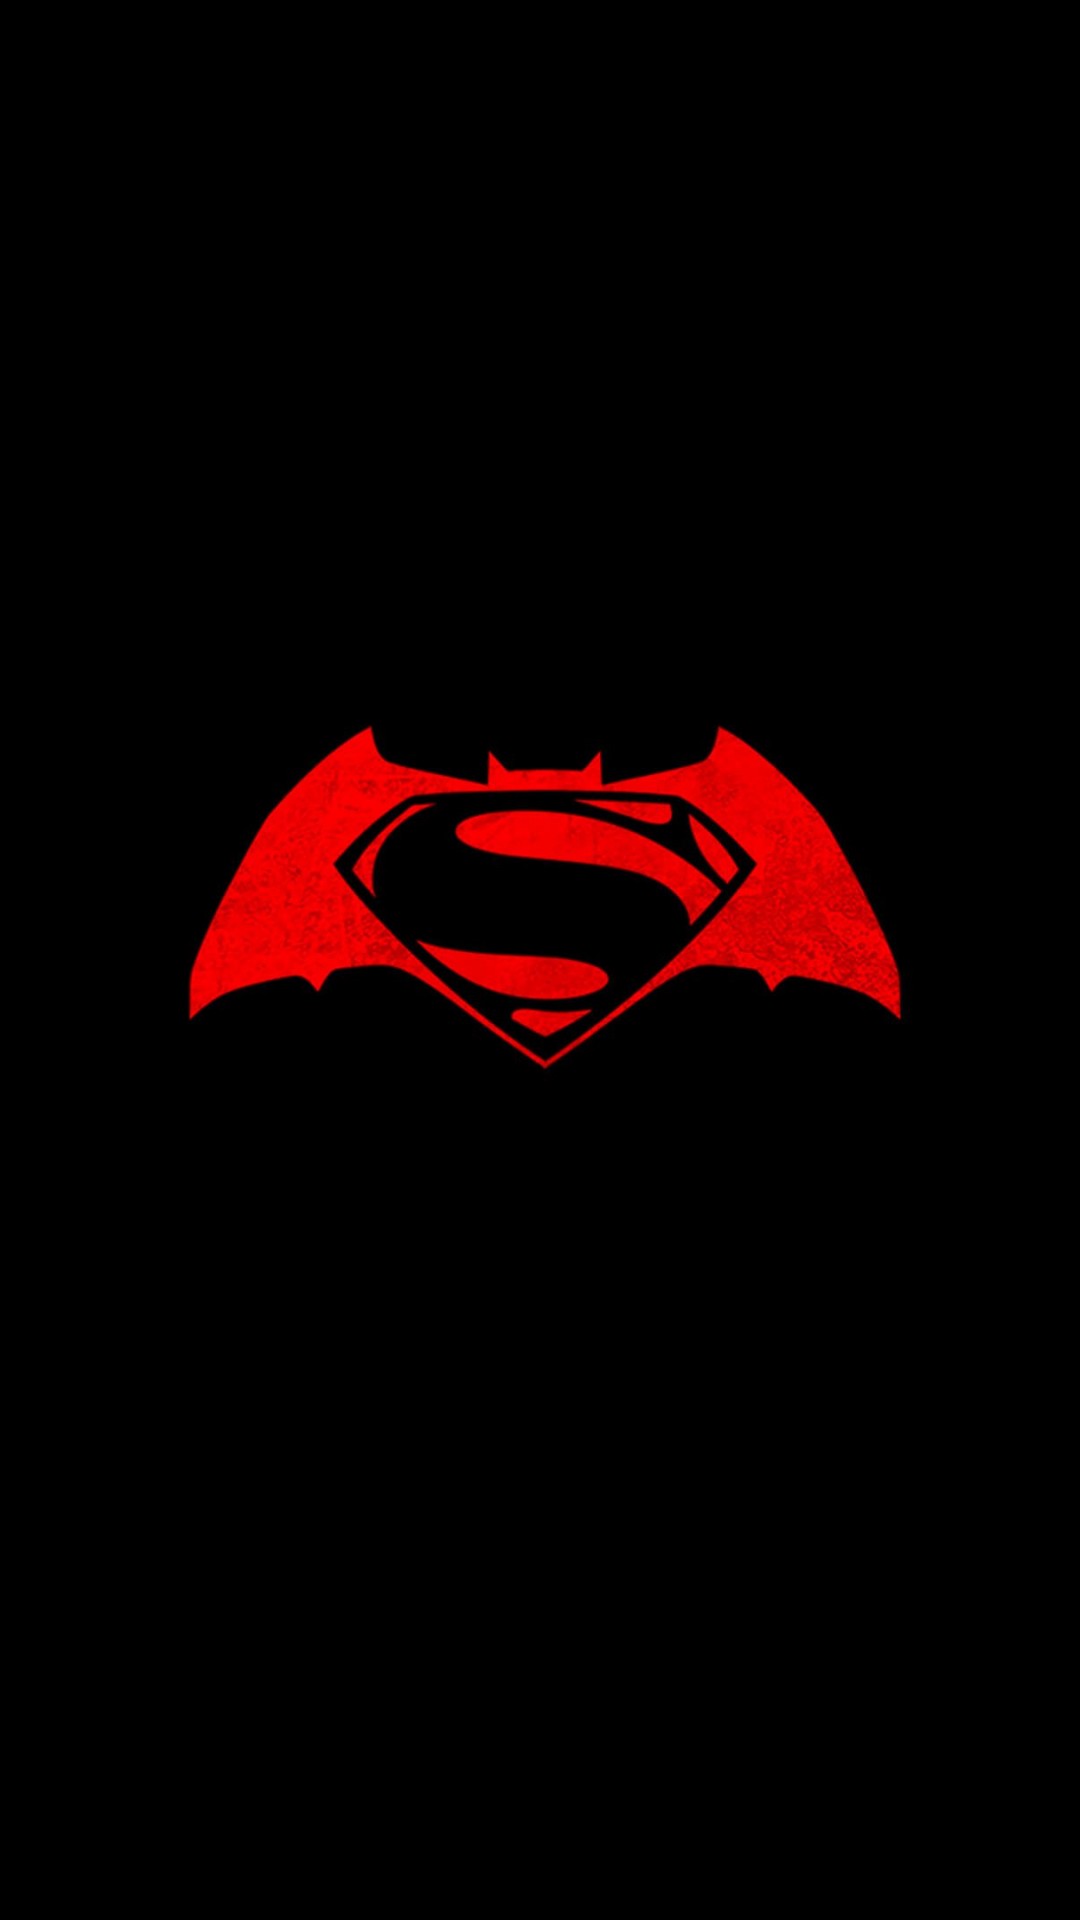 Batman v Superman logo Wallpaper for Google Nexus 5